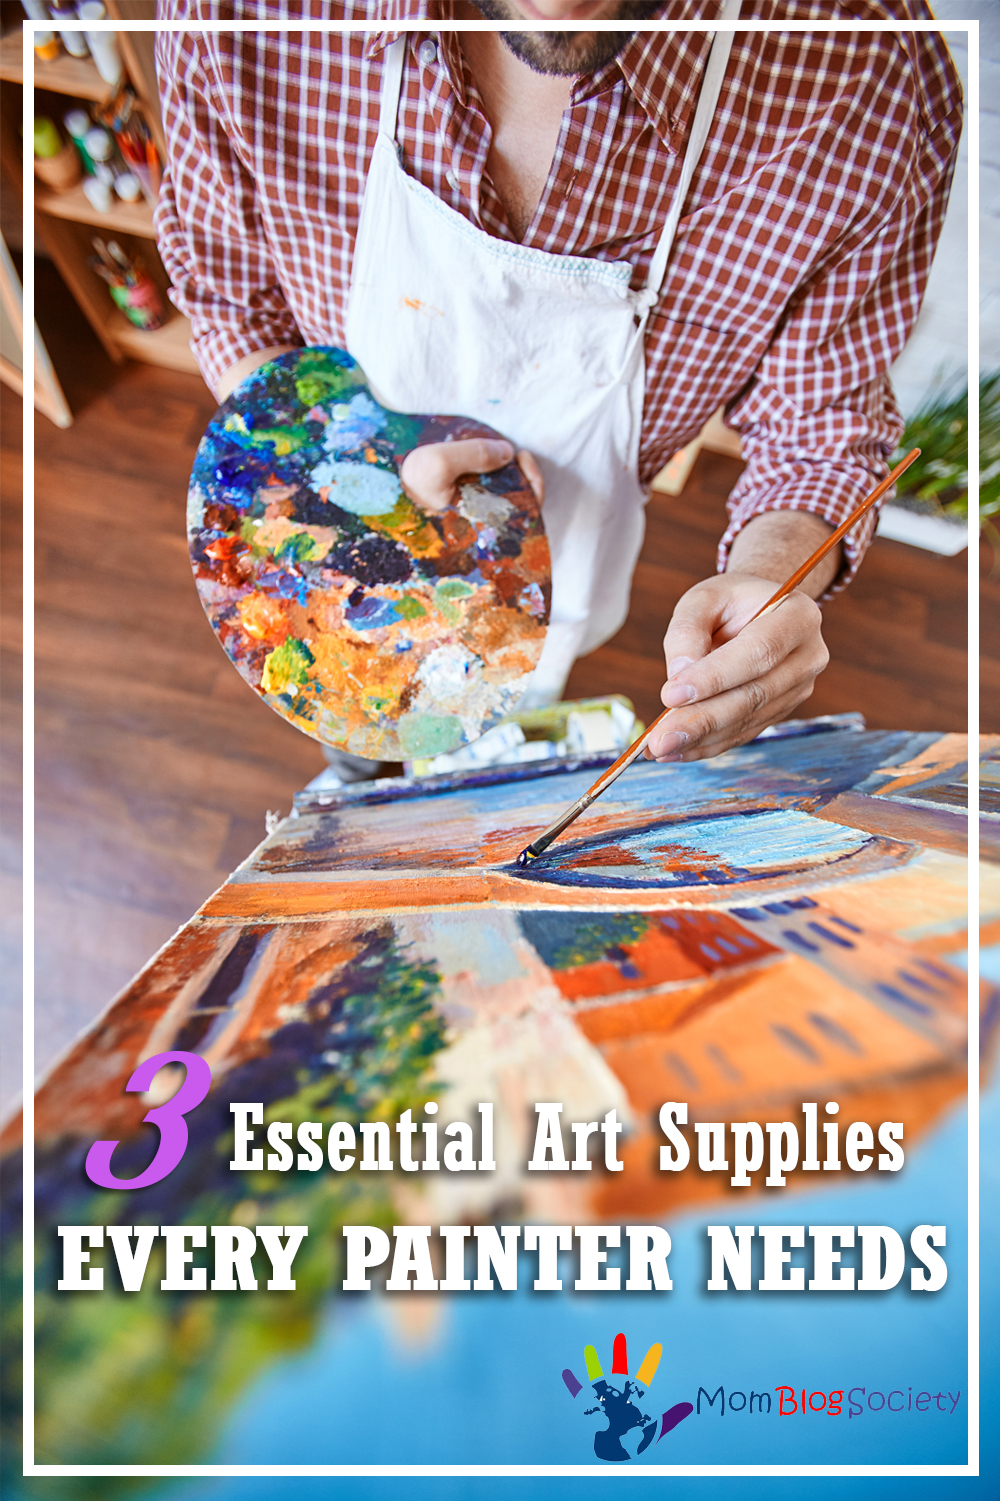 Essential Art Supplies Every Painter Needs